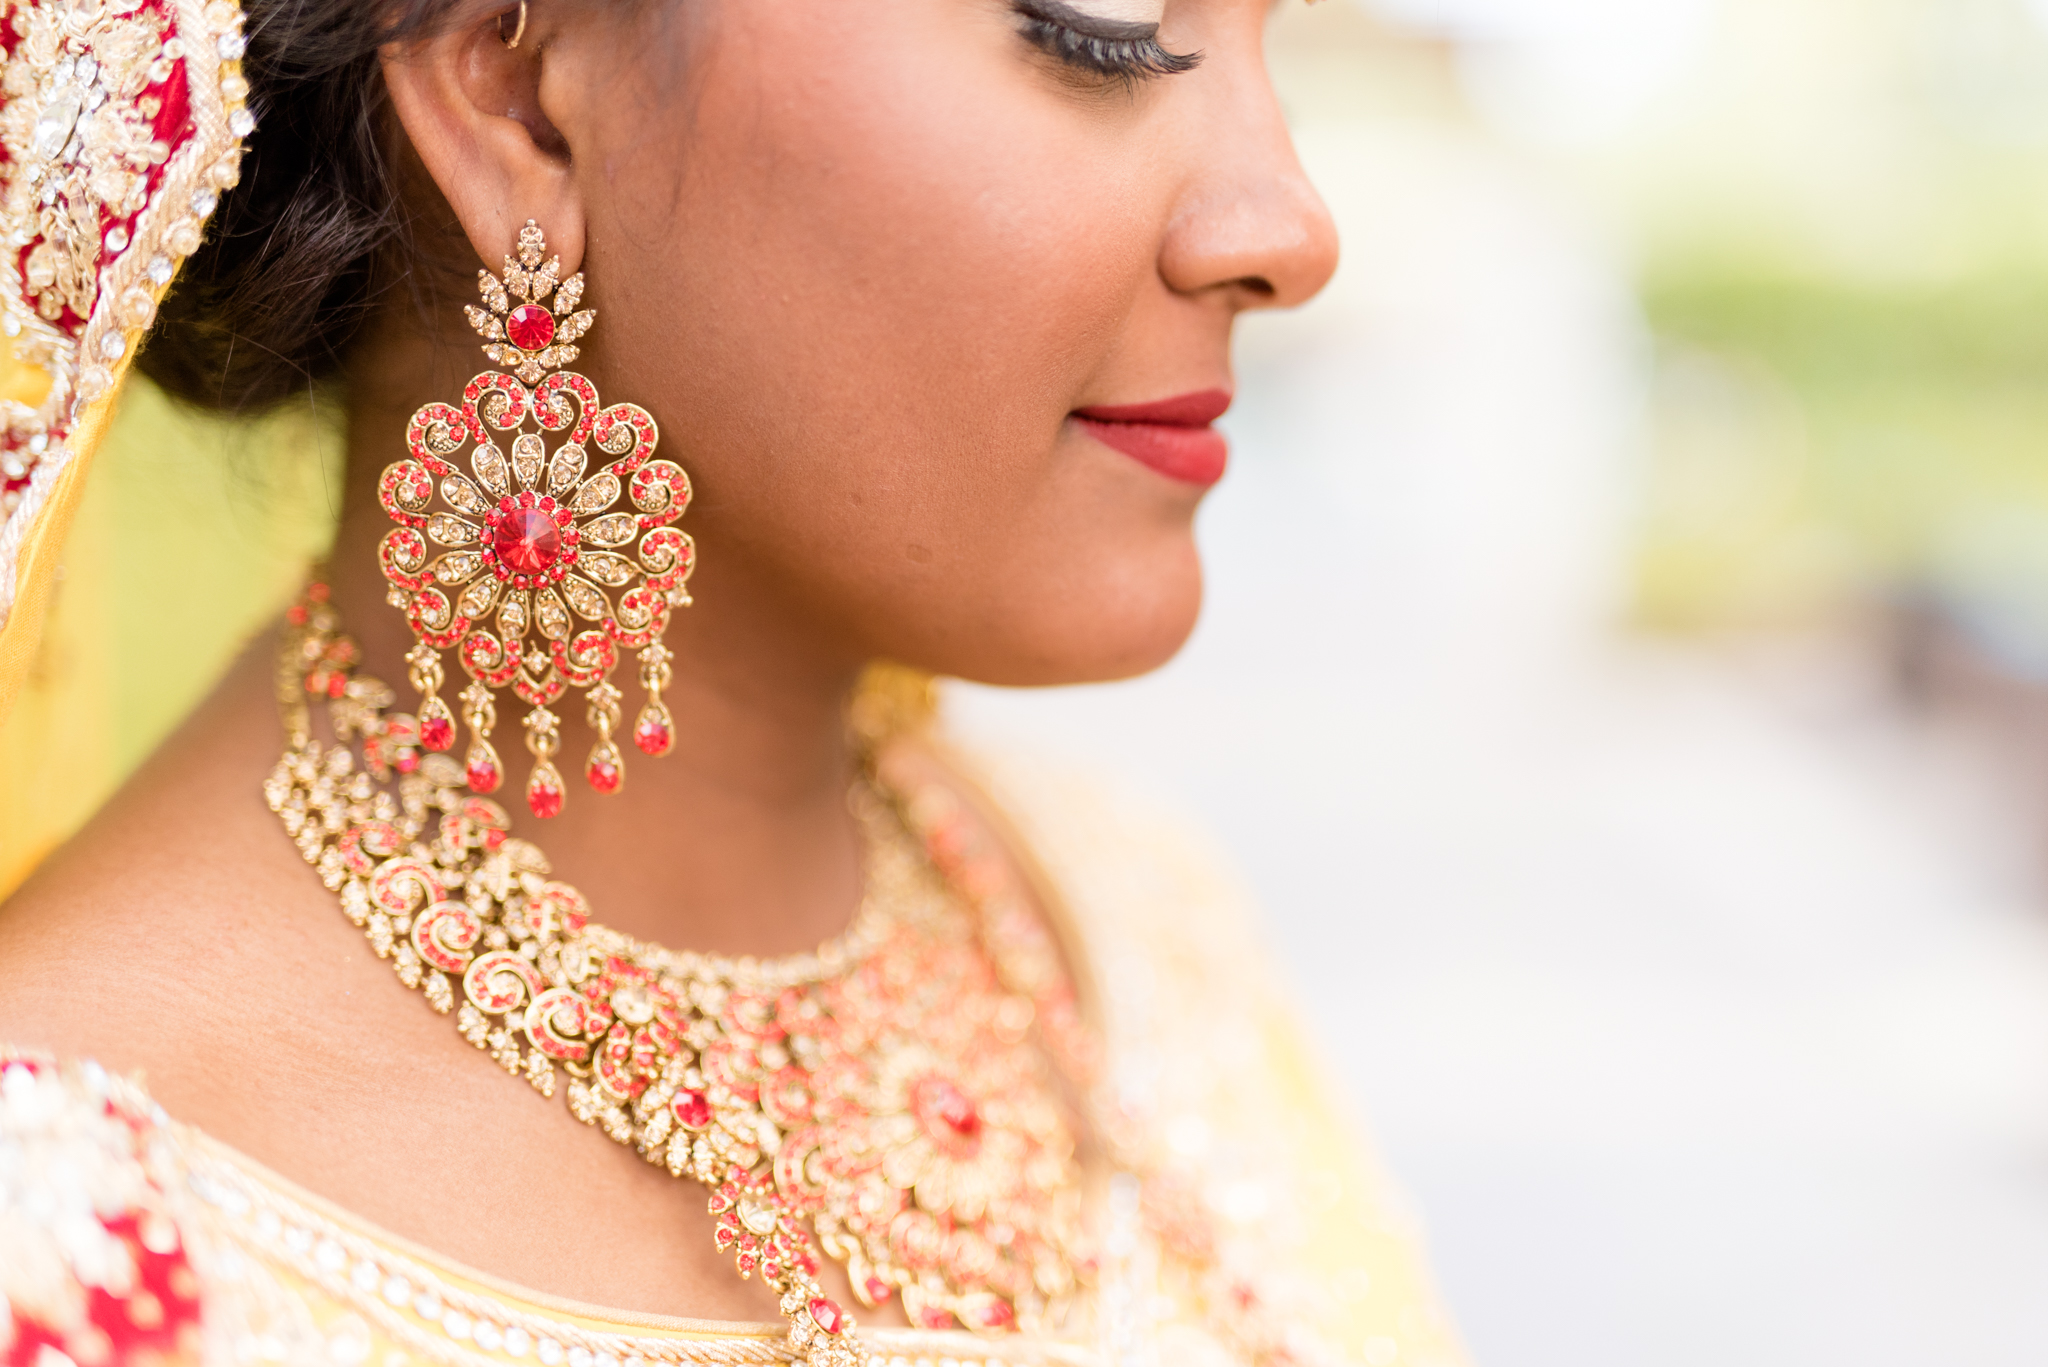 Closeup of bride's earrings.